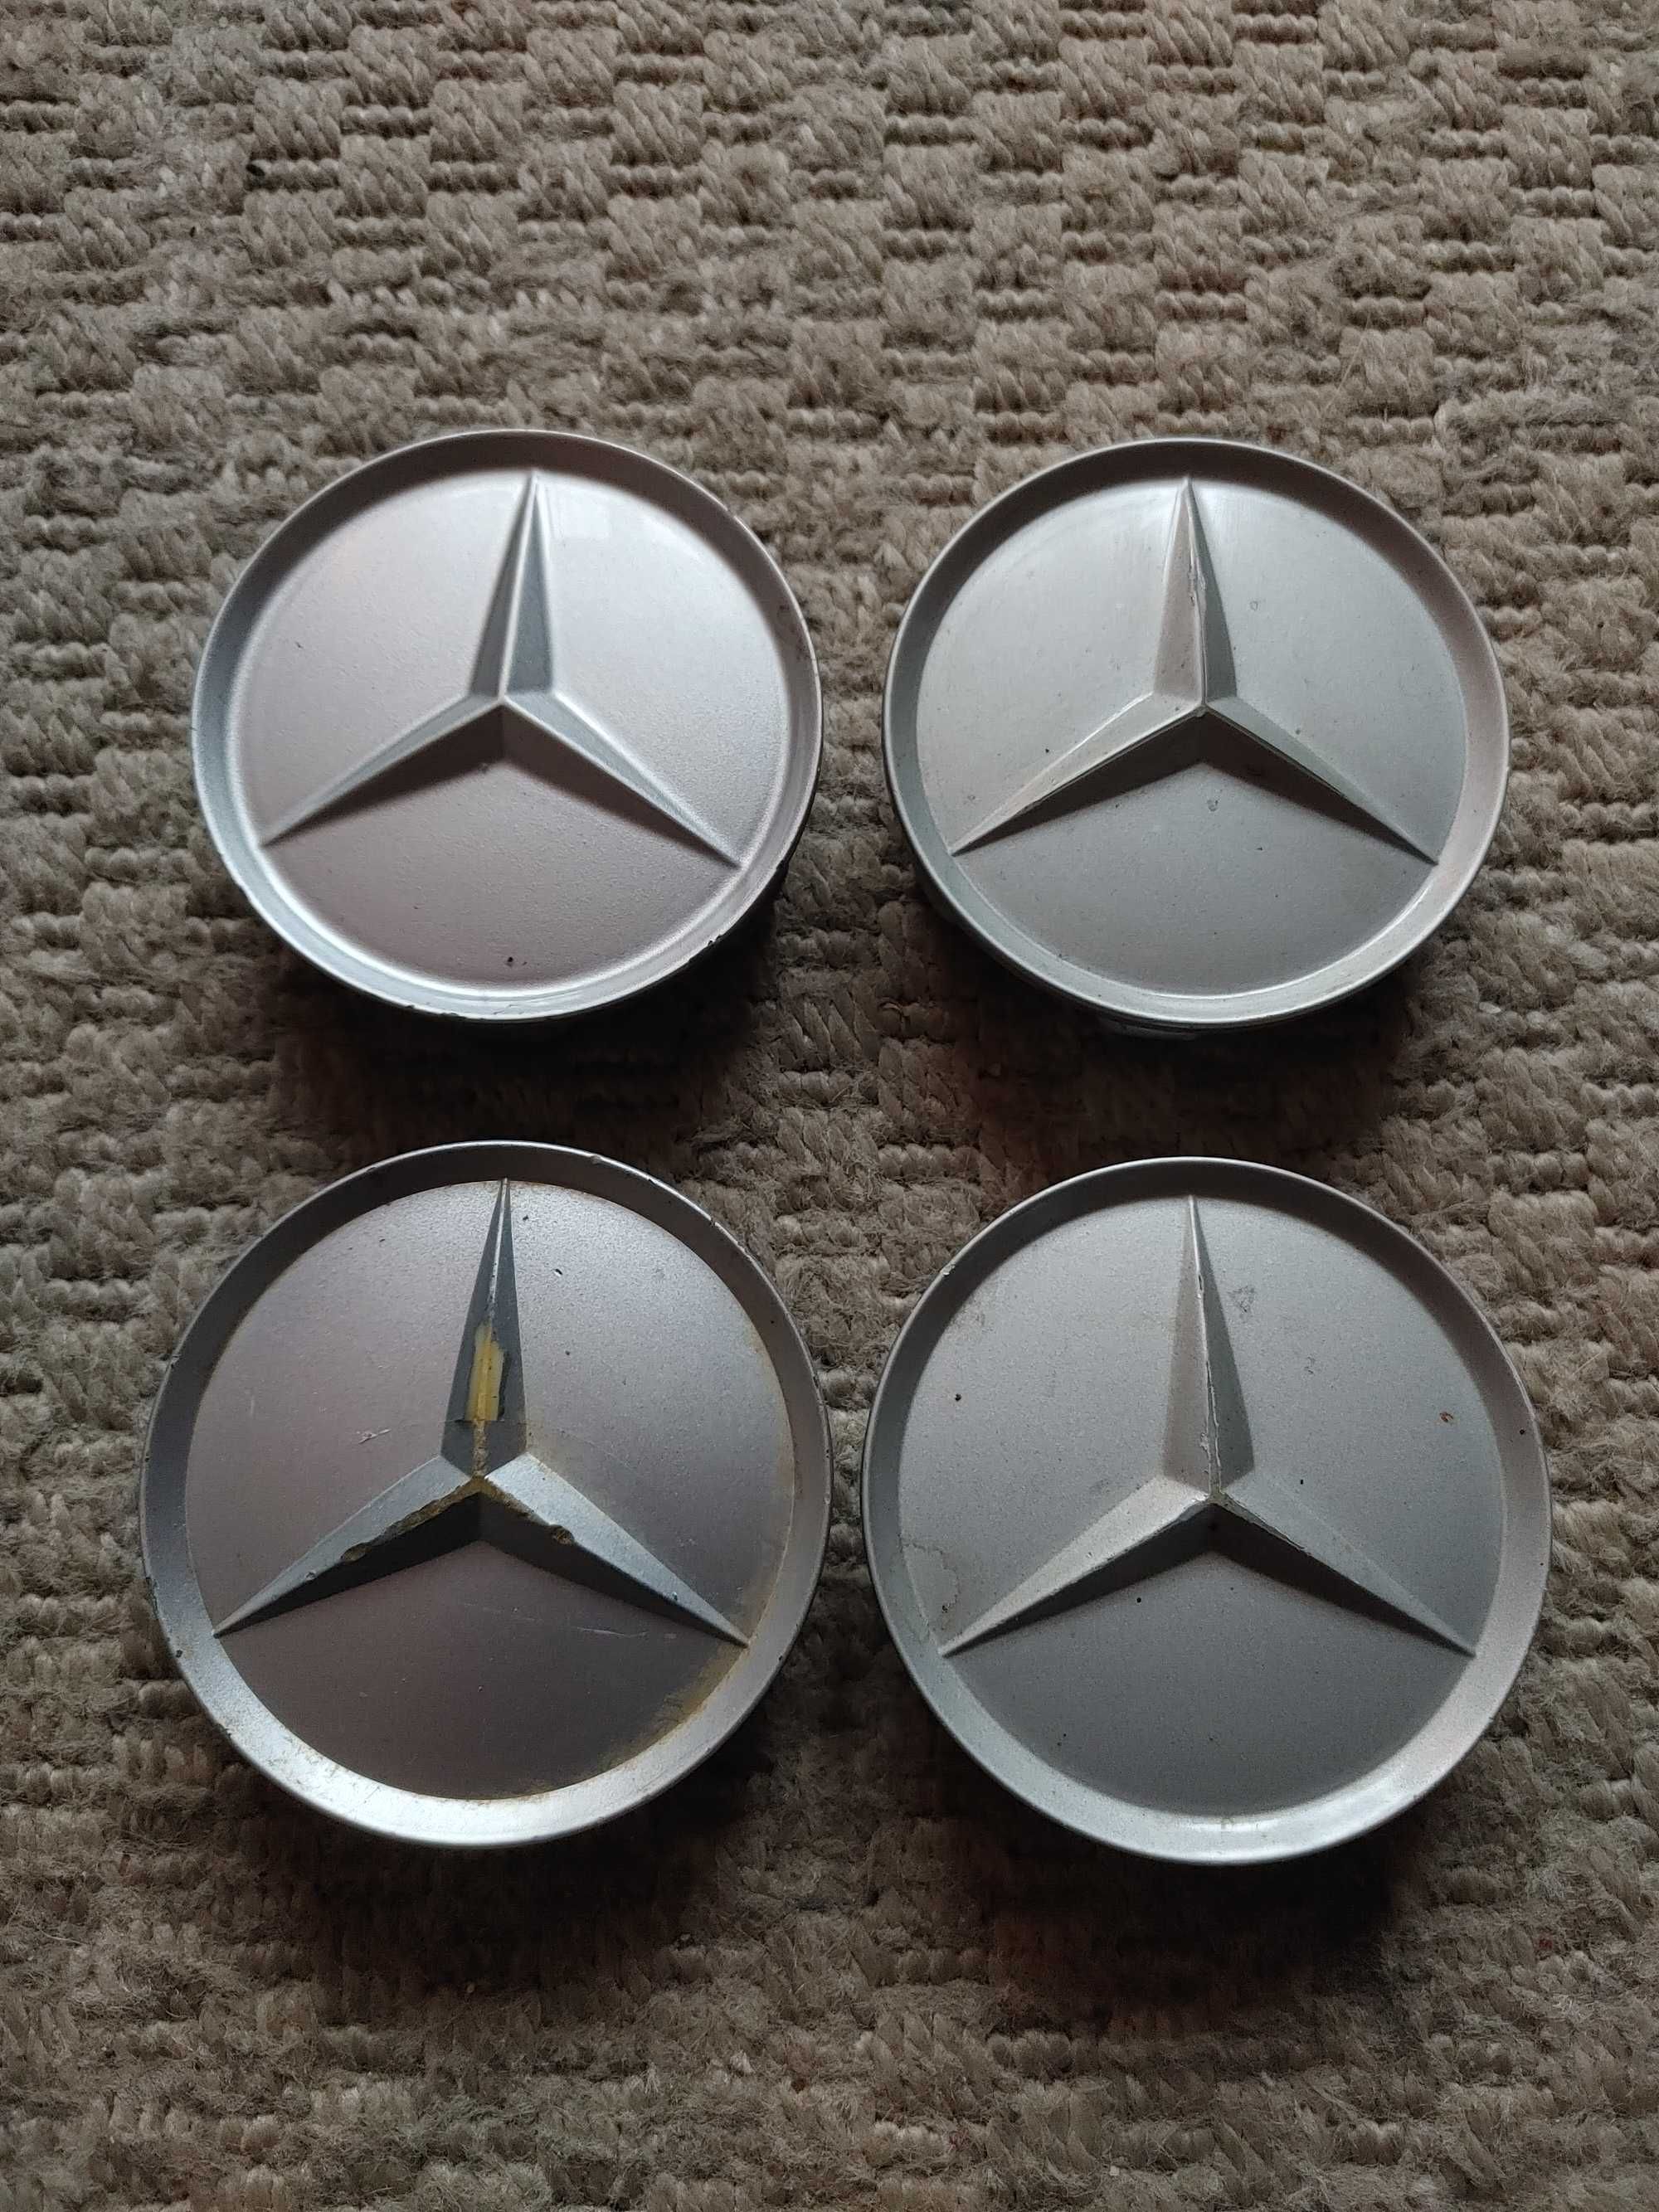 Dekielki alufelgi Mercedes 75mm x 69mm zamienniki cena za komplet